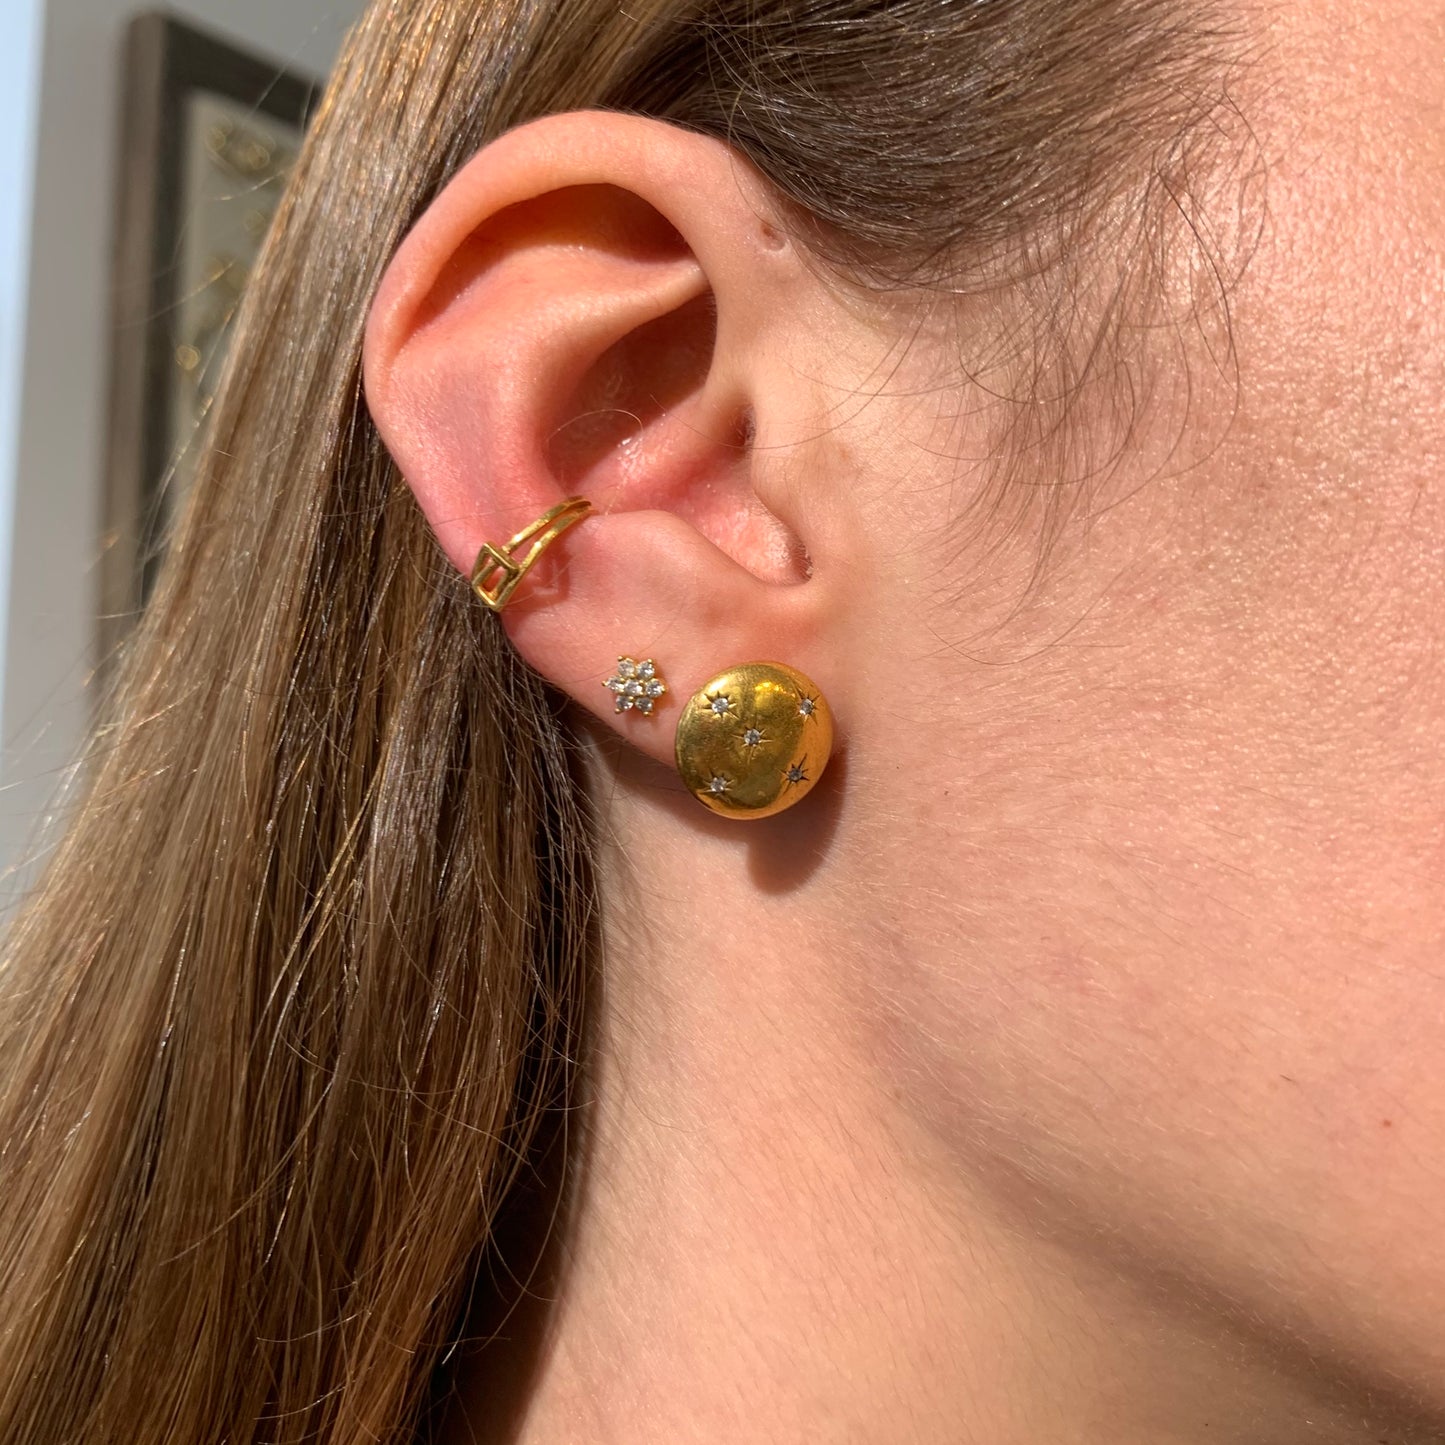 Benoîte single earrings